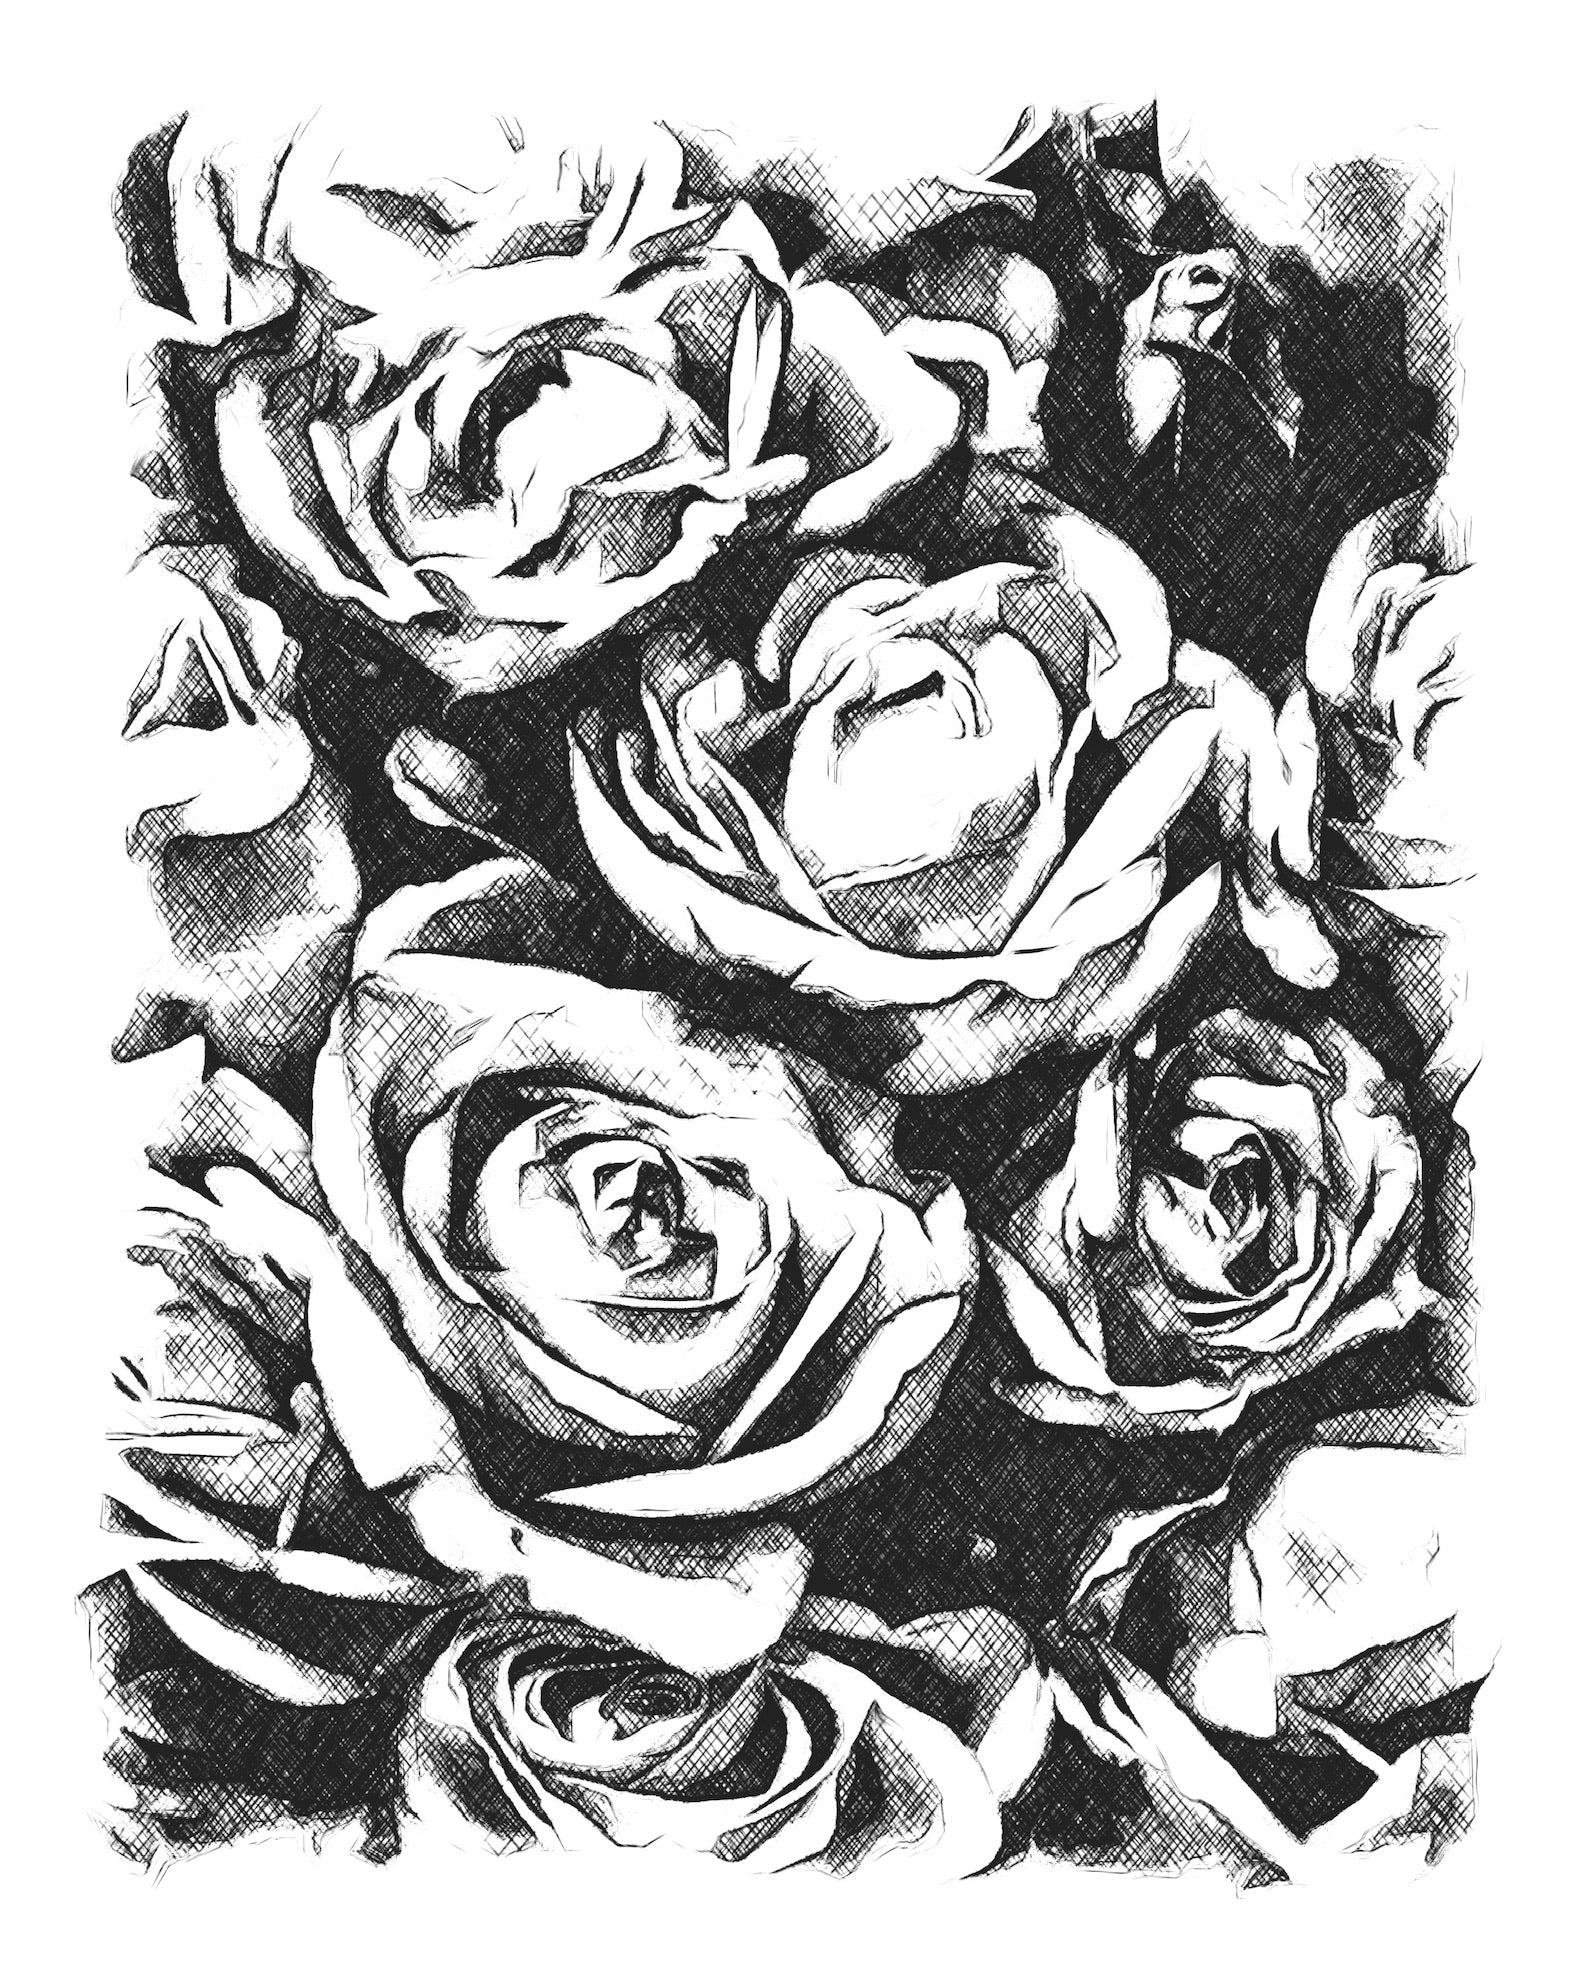 Black & White Roses Wall Art Print